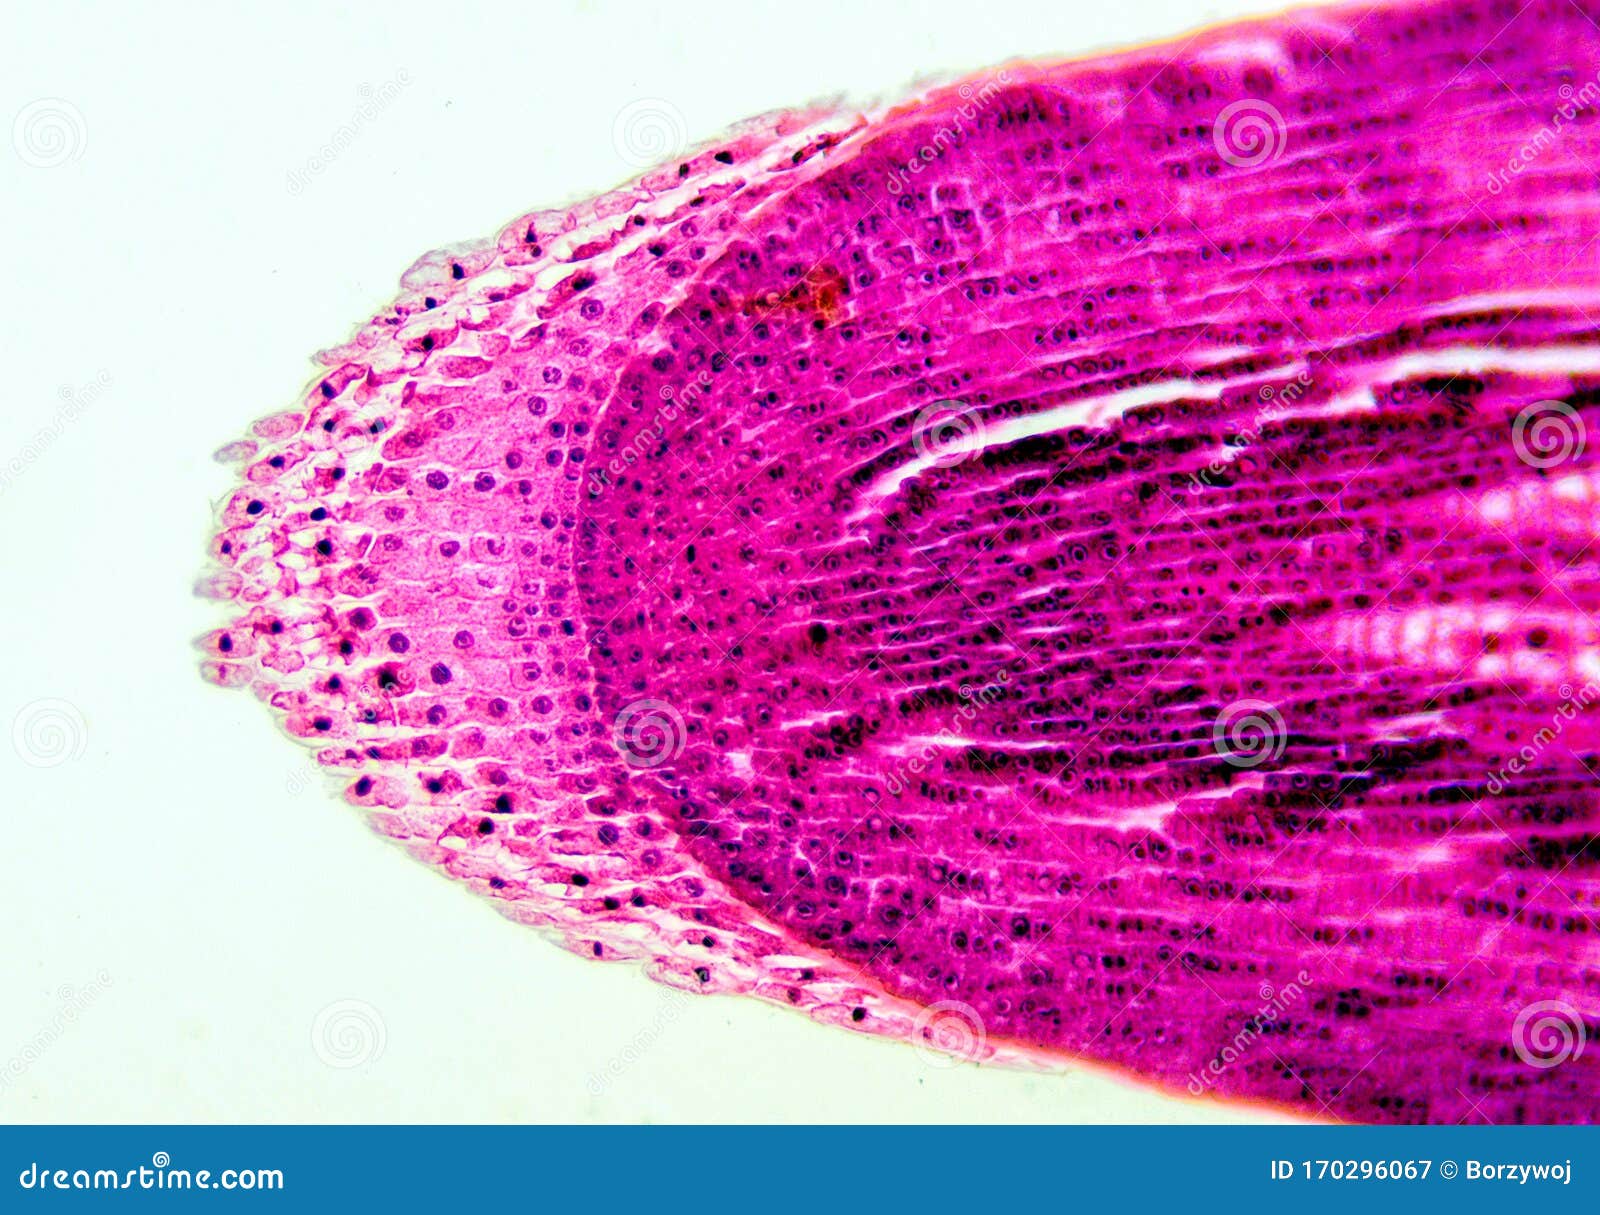 root apex - microscopic view